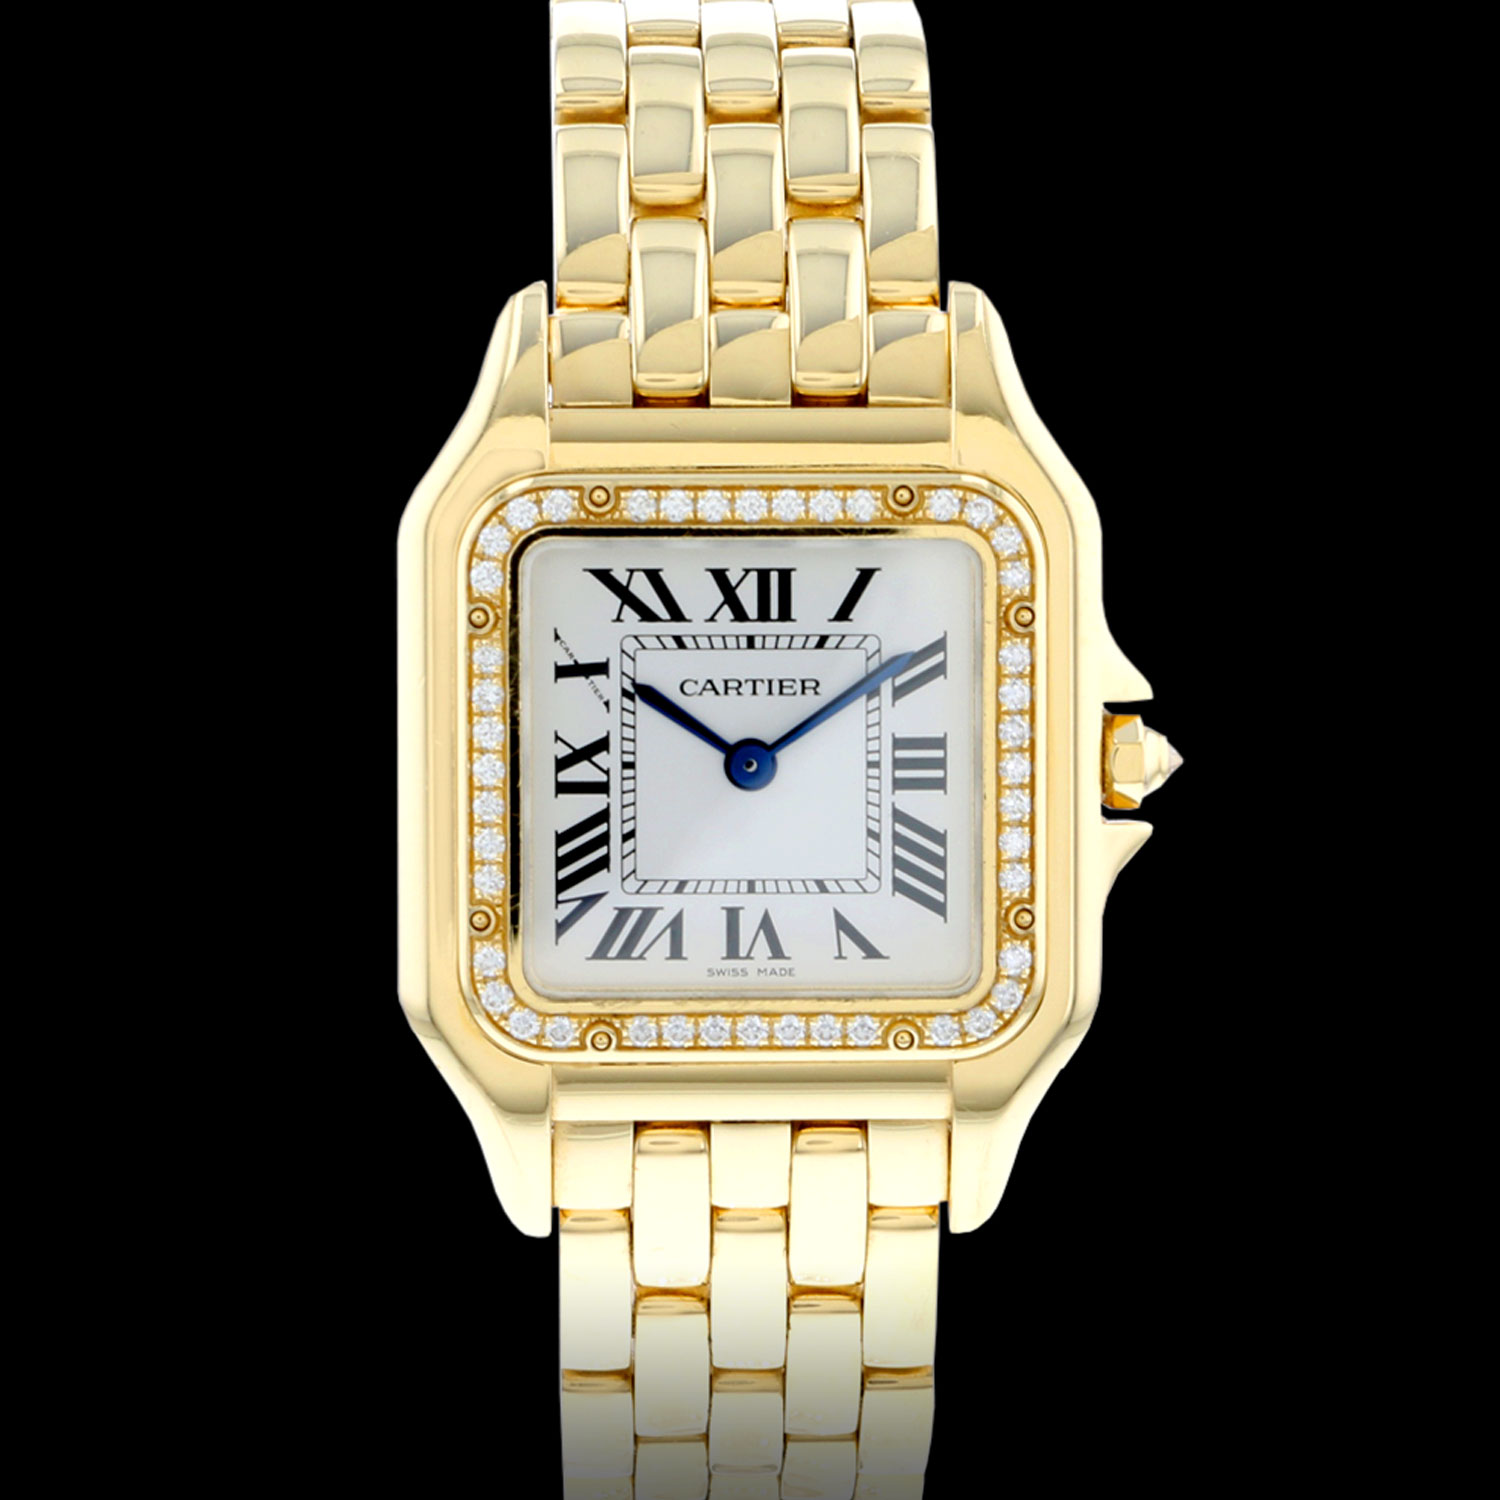 Bot Nu al Typisch Juwelier Burger - Exclusieve horloges - Rolex, Breitling, Cartier, IWC